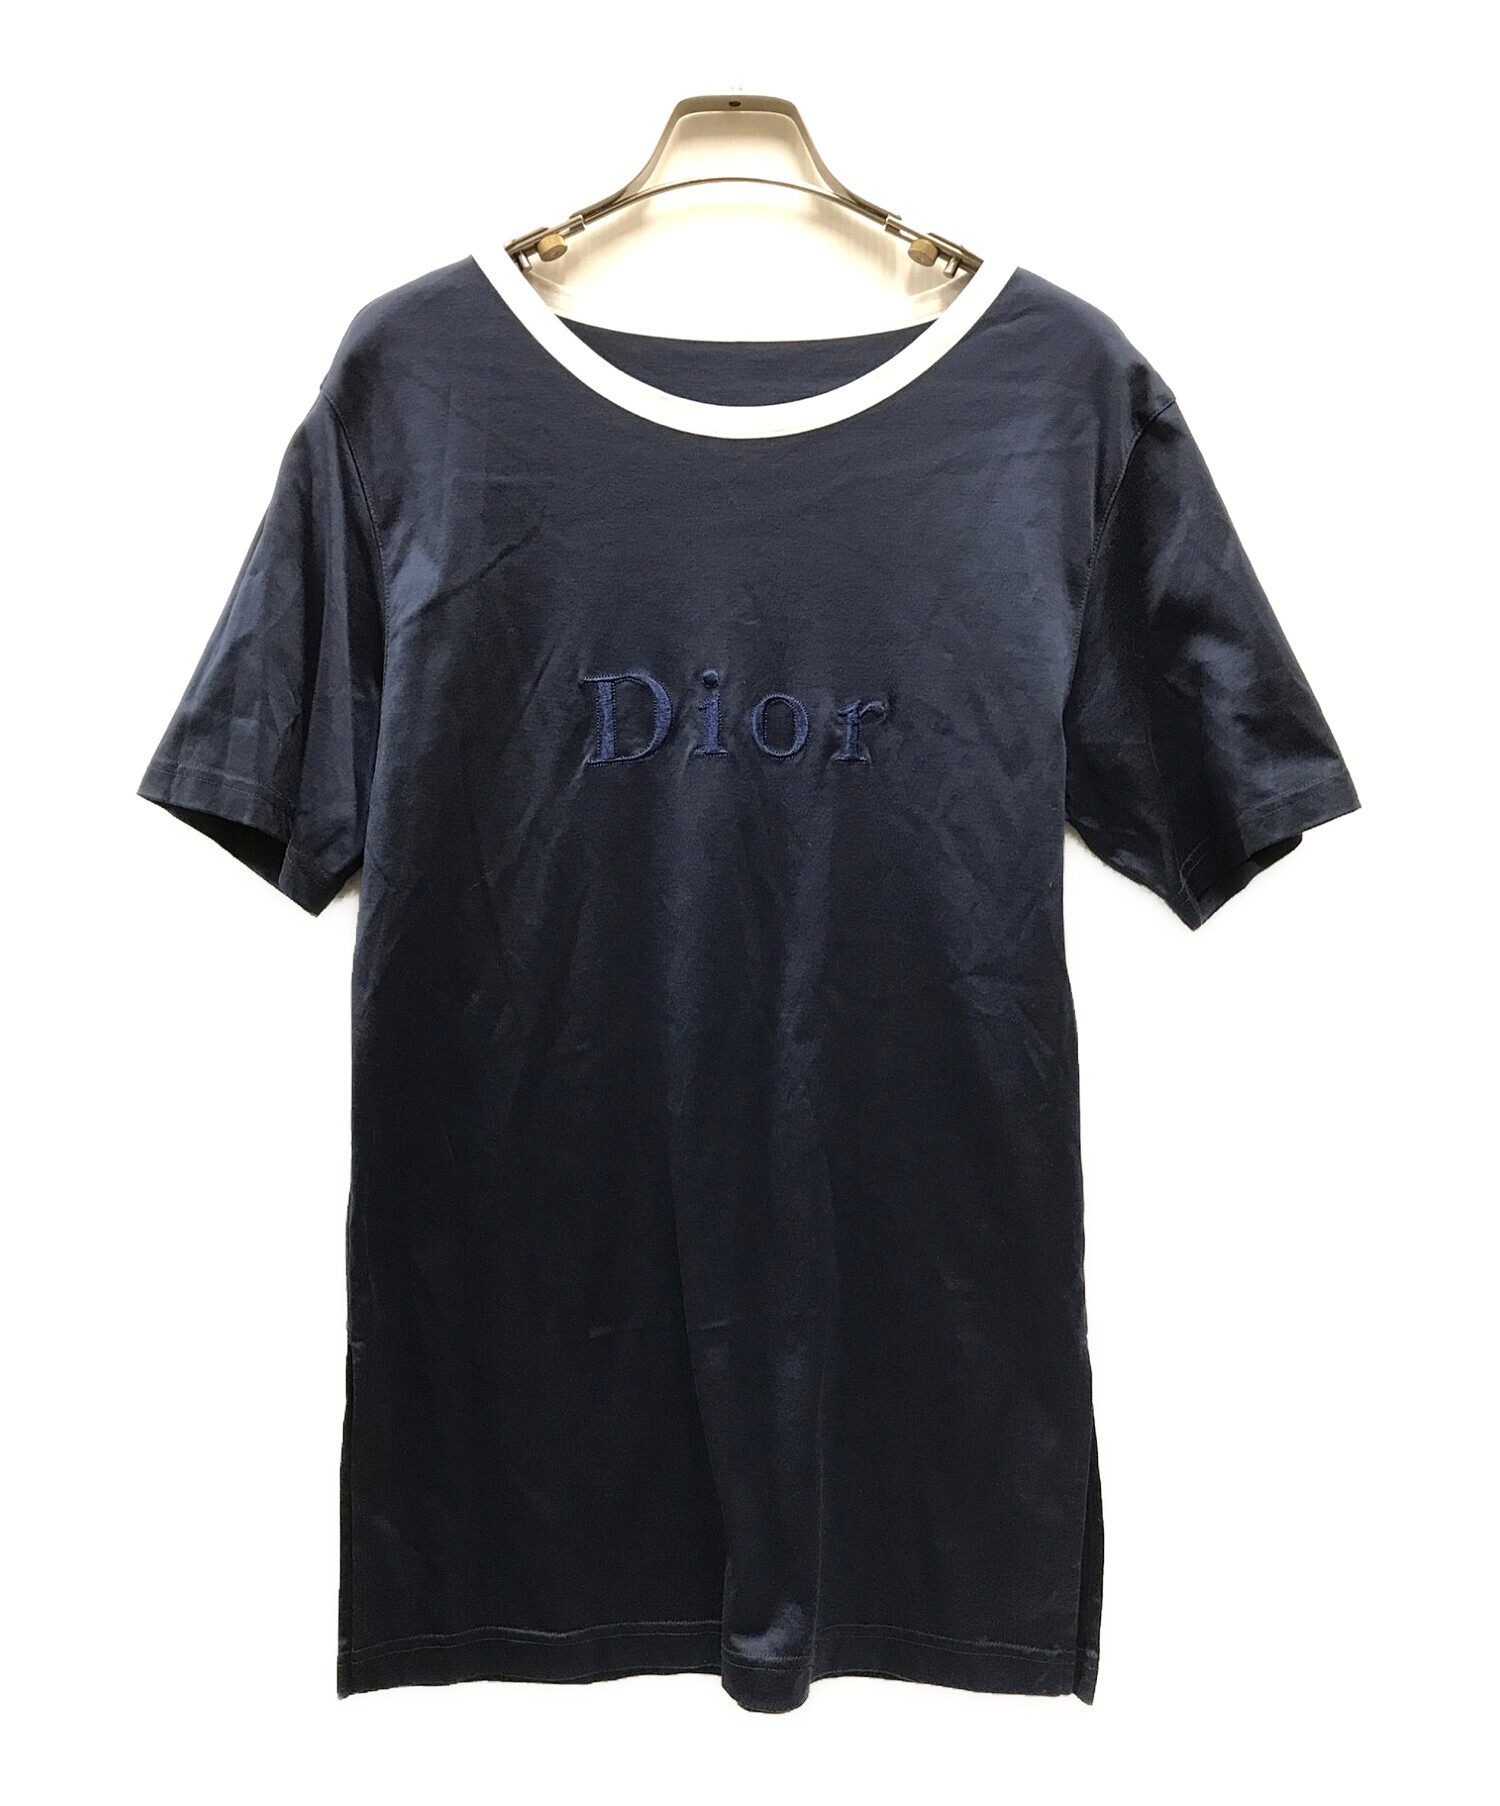 Christian Dior Sports (クリスチャン ディオールスポーツ) ロゴクルーネックTシャツ ネイビー サイズ:M